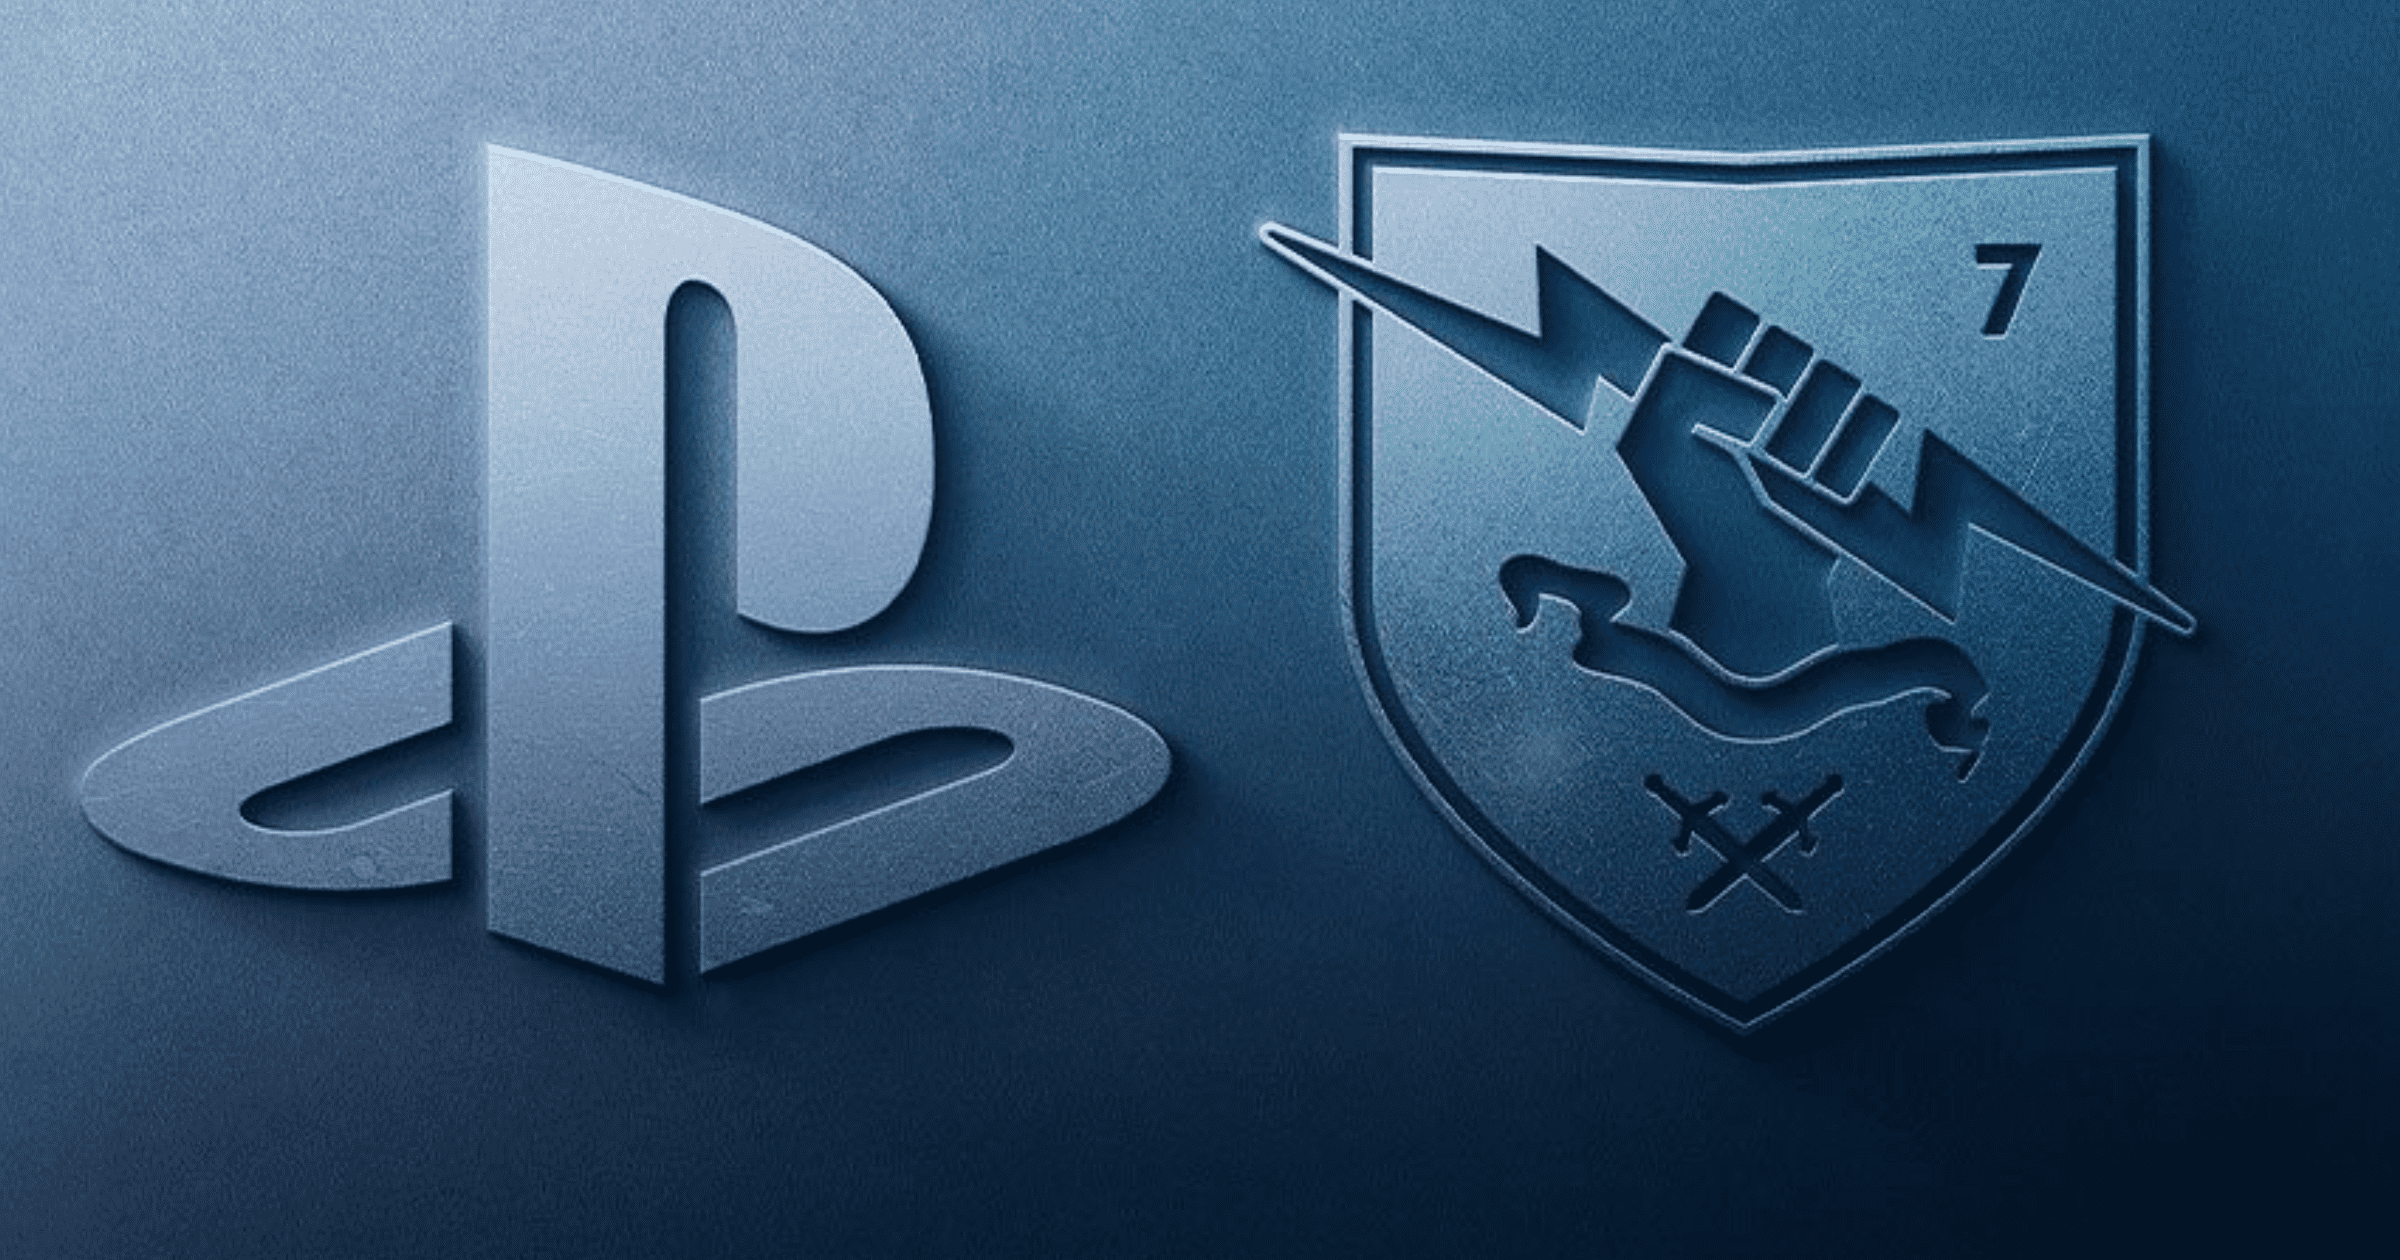 Sony Playstation Bungie logos